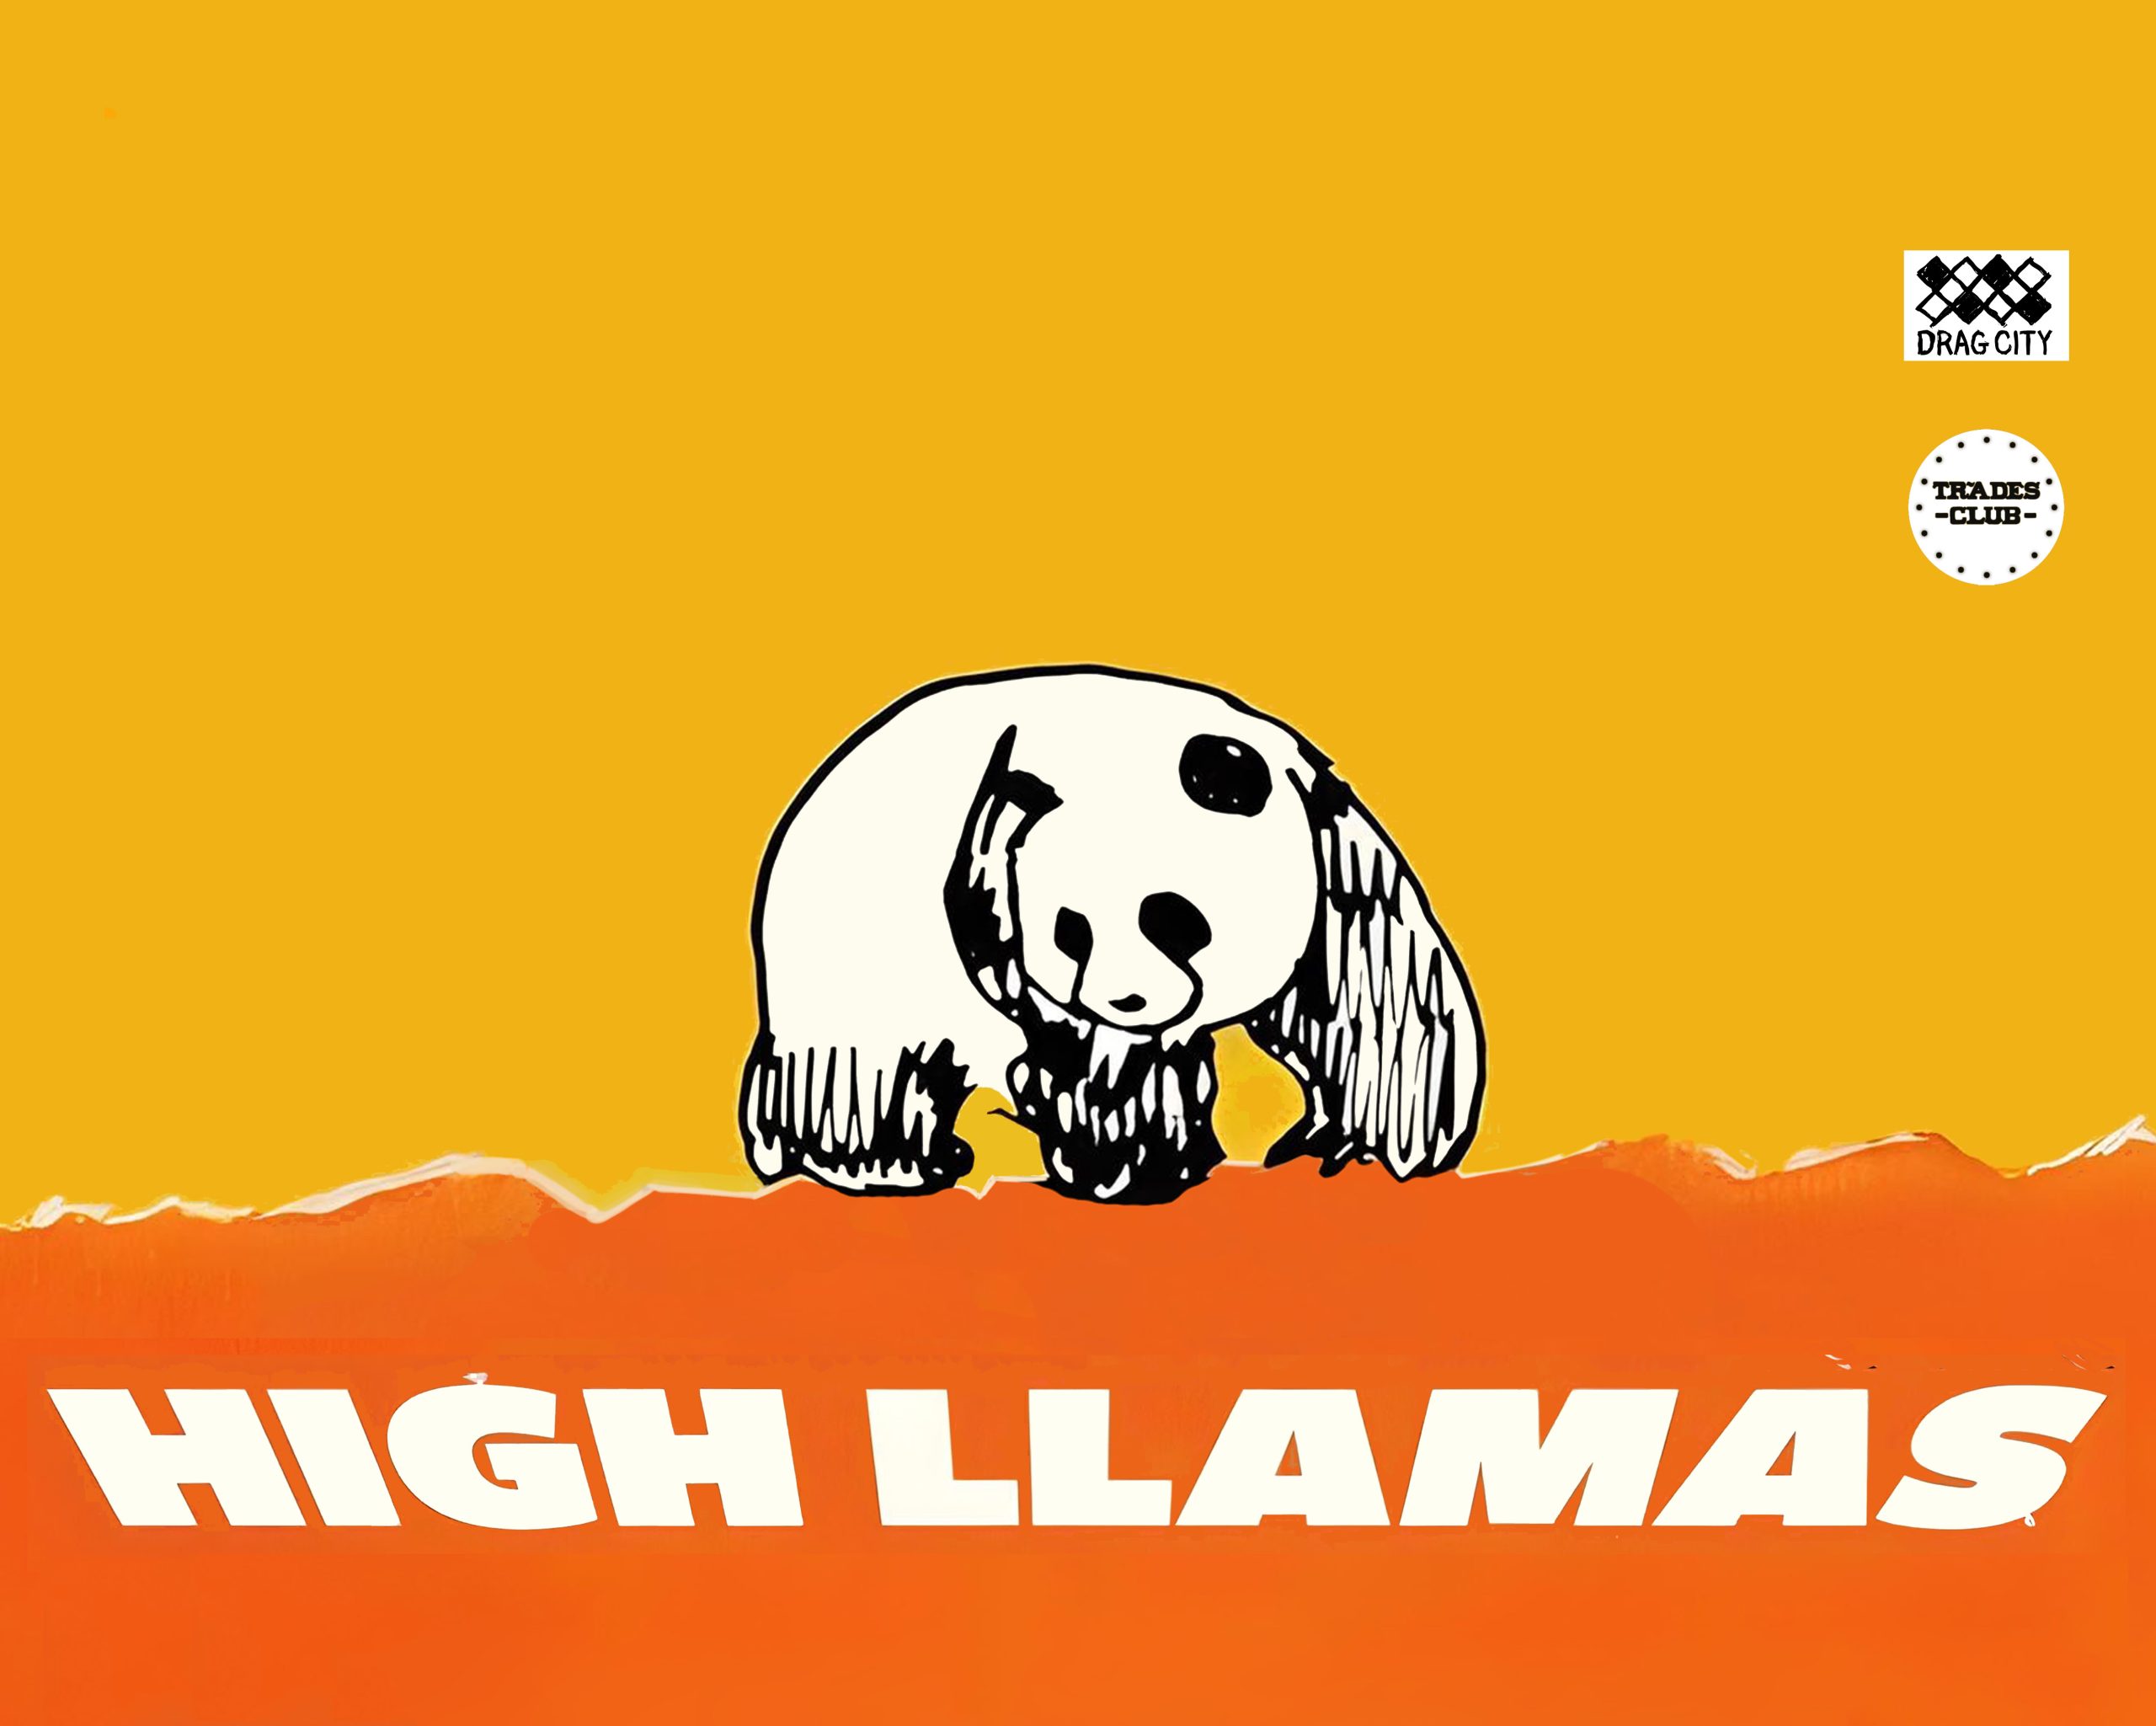 The High Llamas